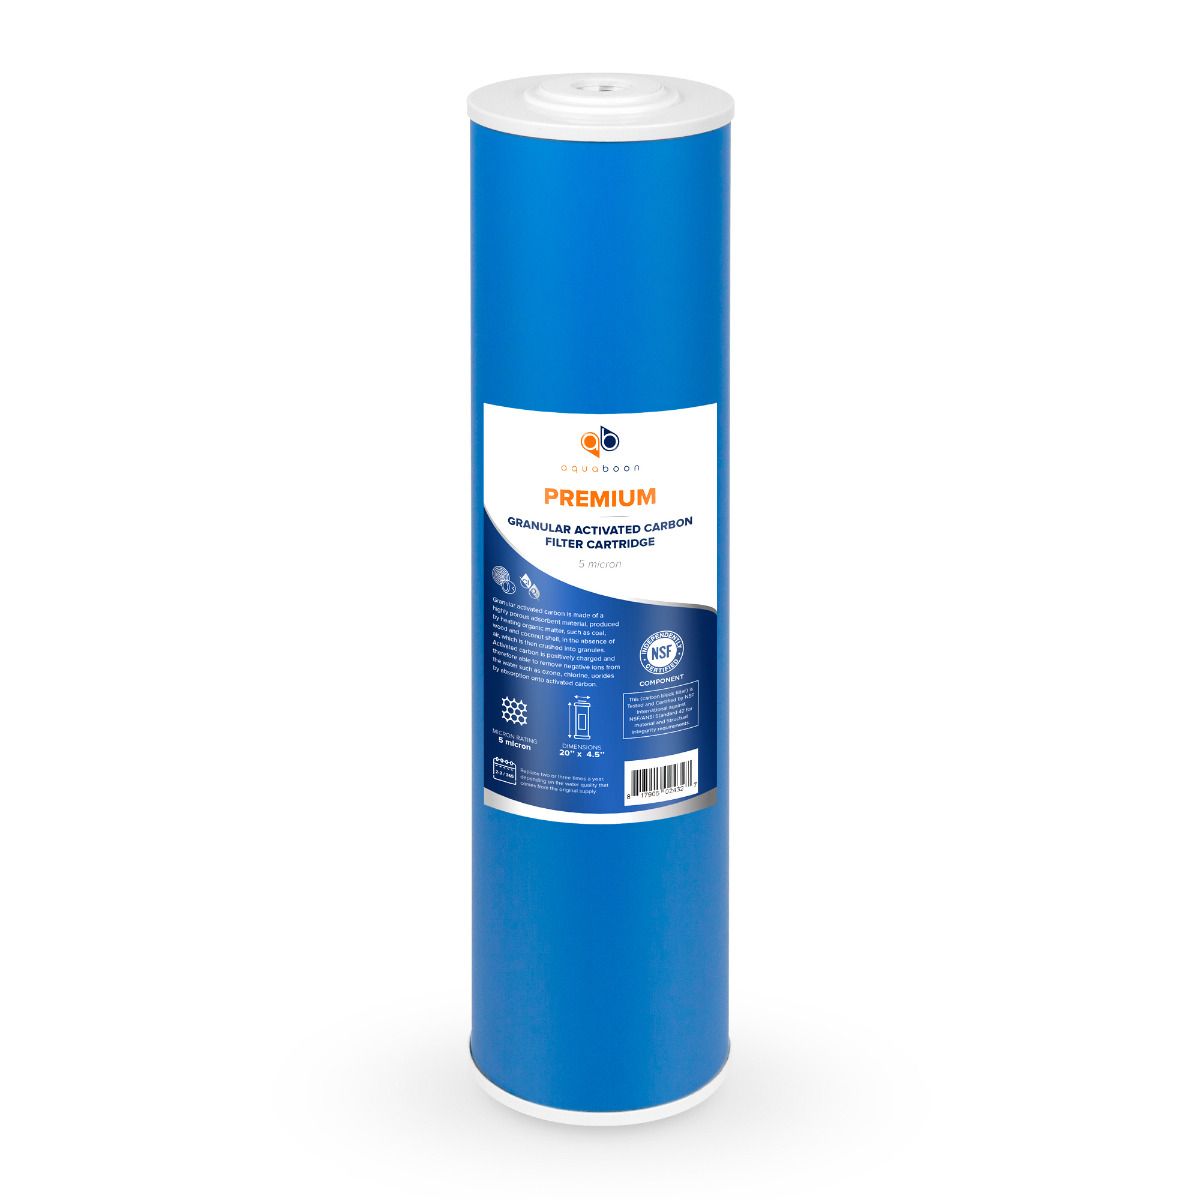 Premium Aquaboon 5 Micron 20 x 4.5 Inch. GAC Water Filter Cartridge ABP-G20BB5M